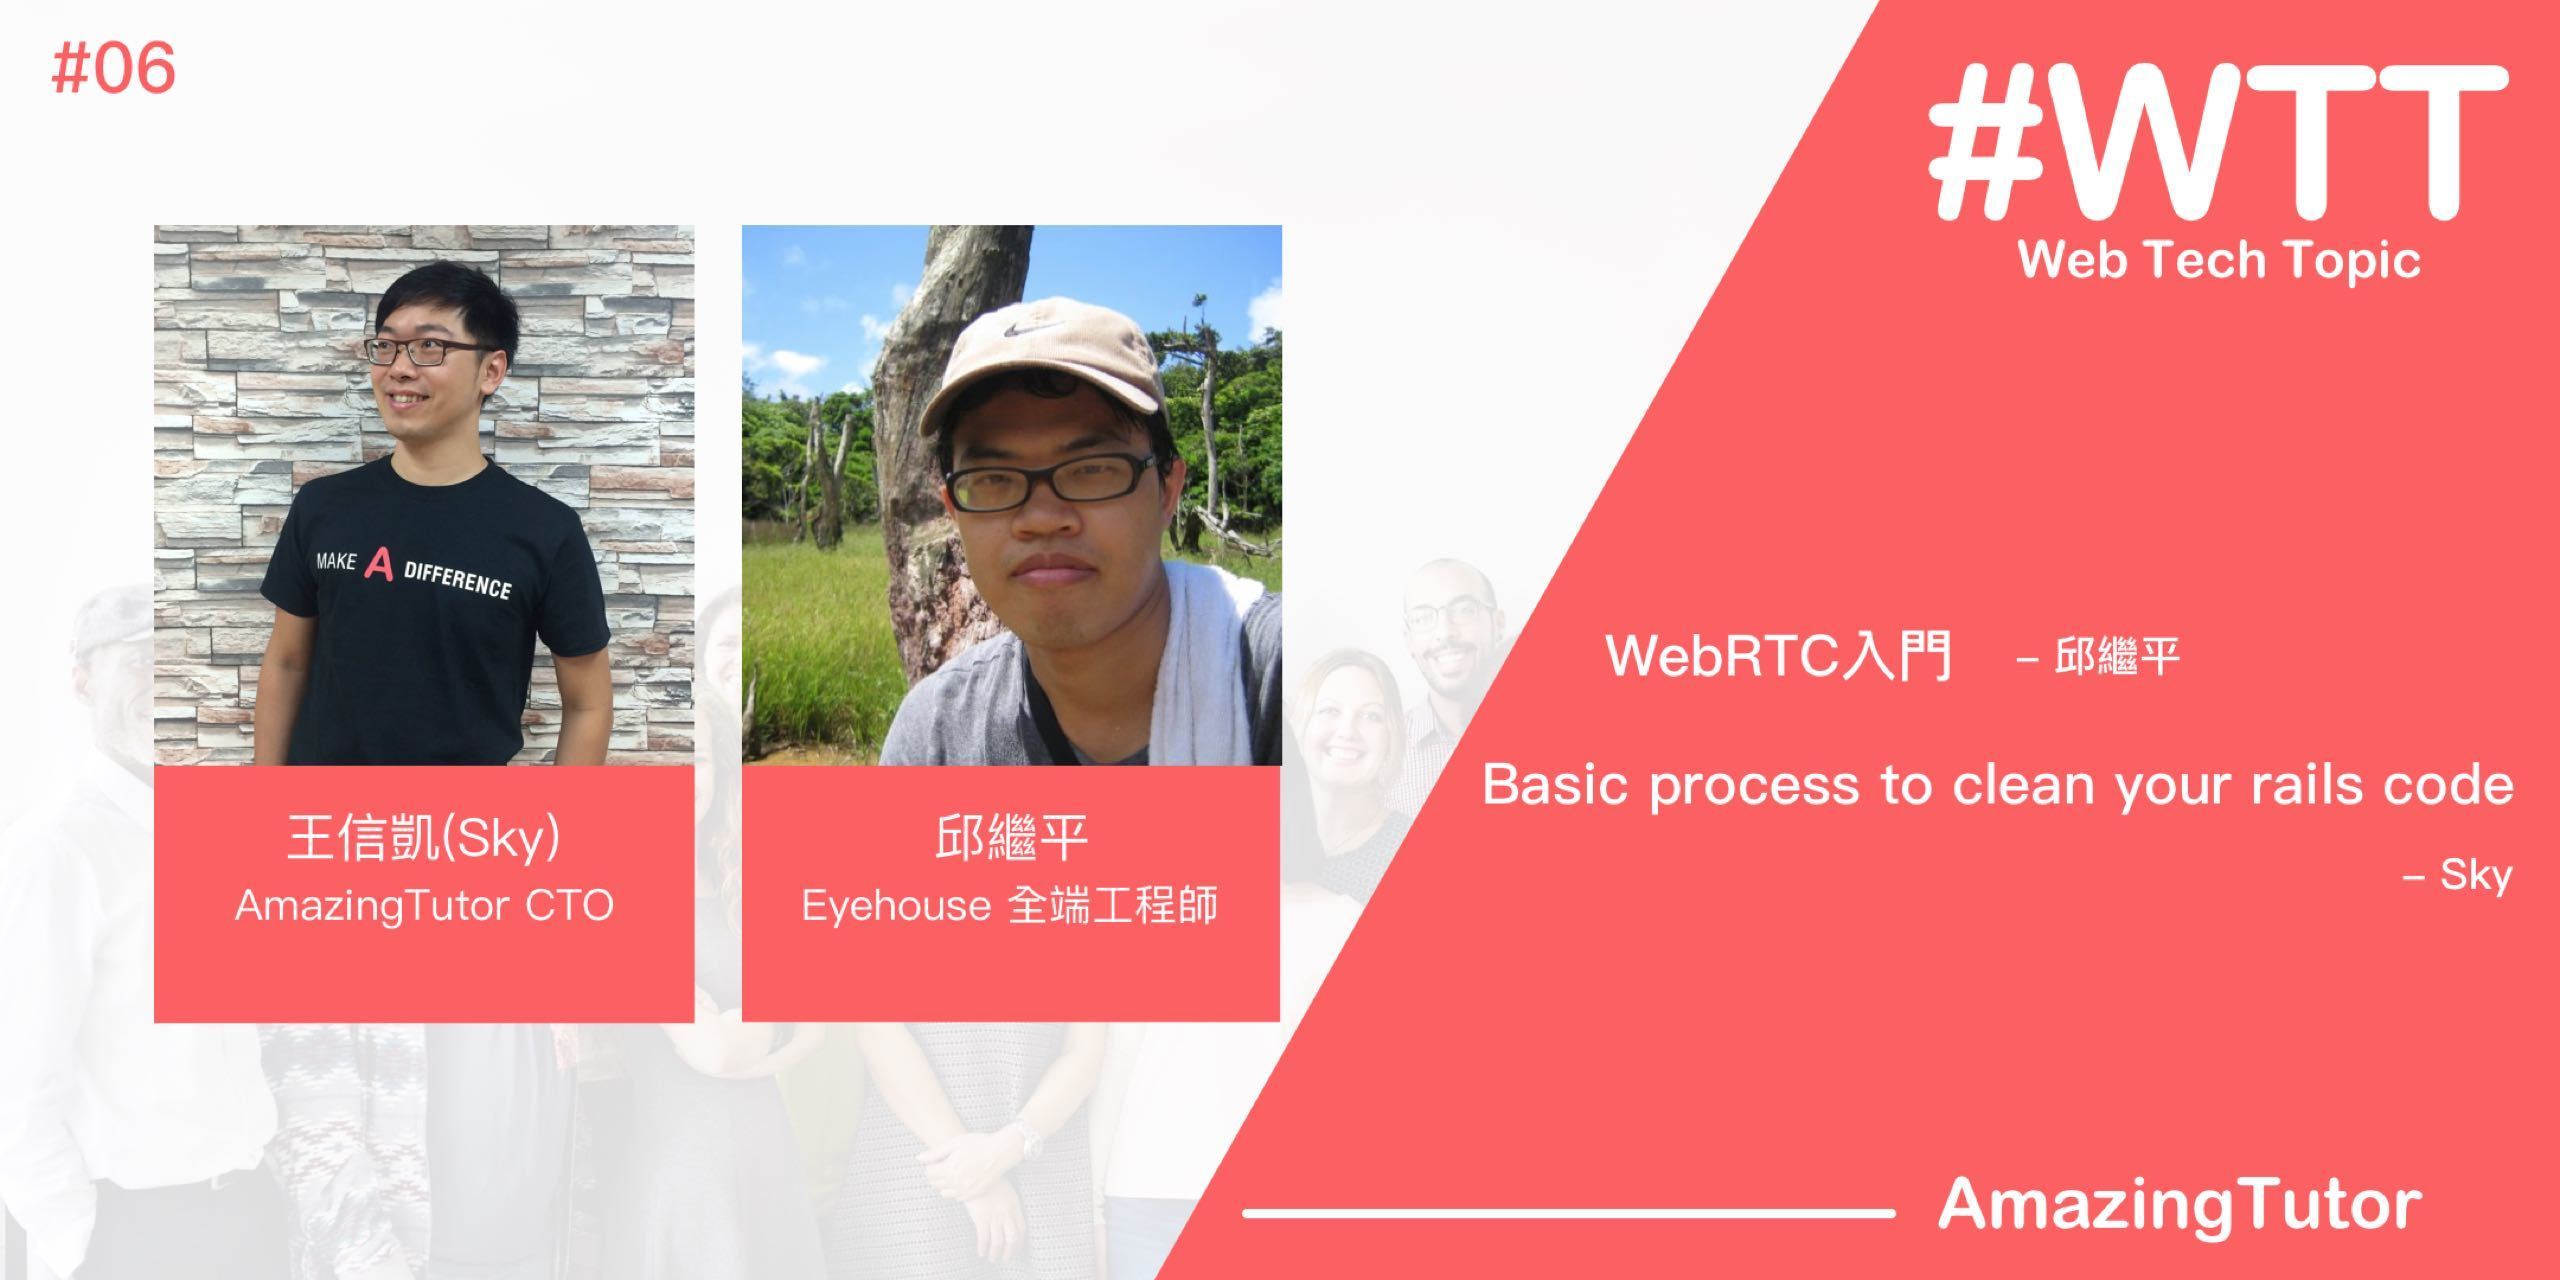 Web Tech Topic #6 - WebRTC入門、Clean Rails code basic